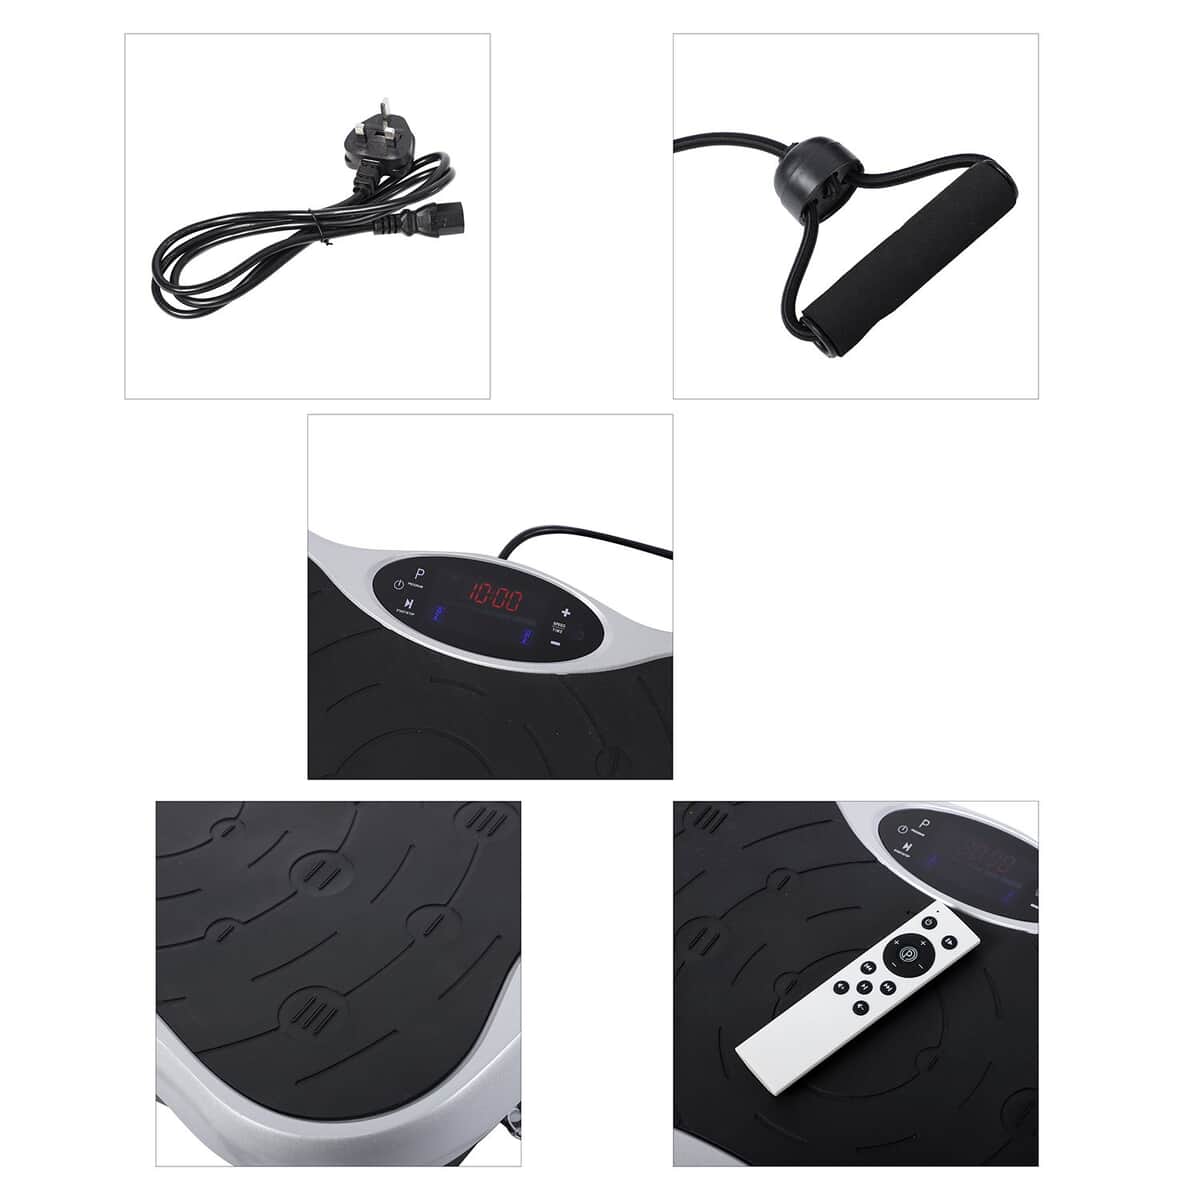 SoulSmart Whole Body Fitness Vibration Platform with Resistance Bands, Remote, & USB Speaker (200 W) White image number 6